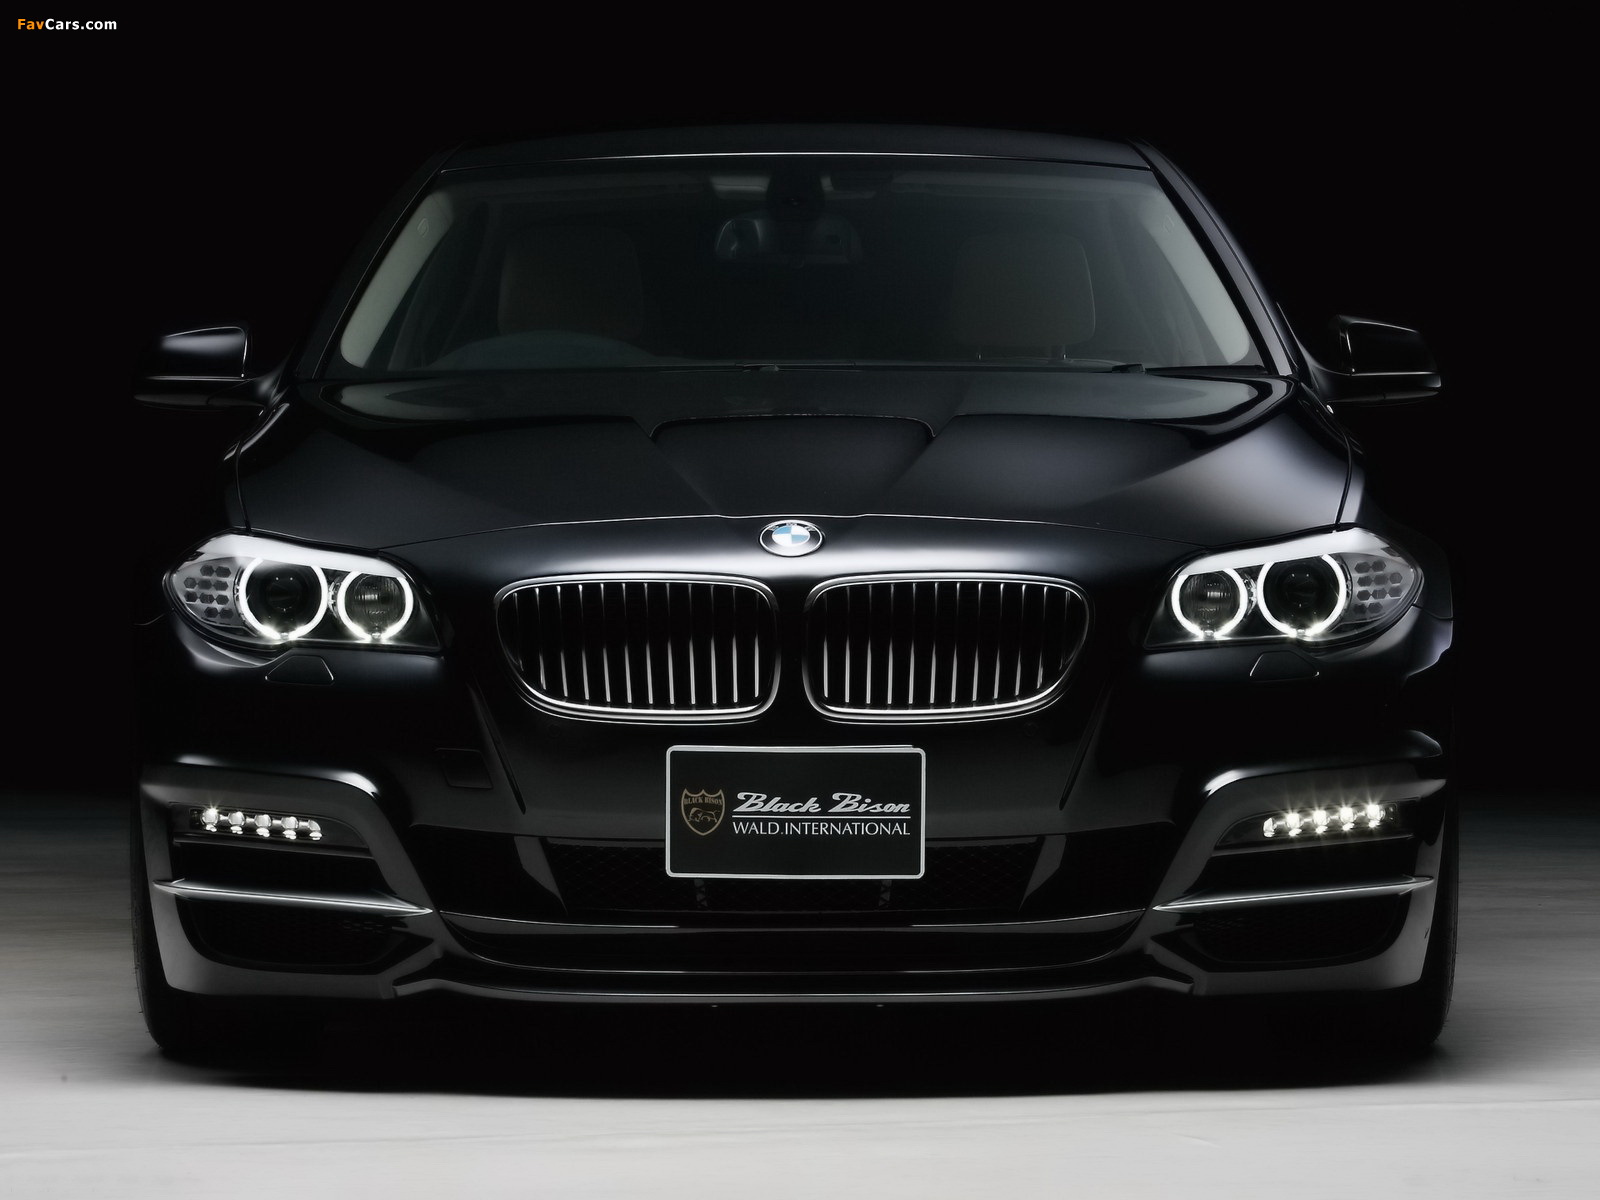 WALD BMW 5 Series Black Bison Edition (F10) 2011 photos (1600 x 1200)